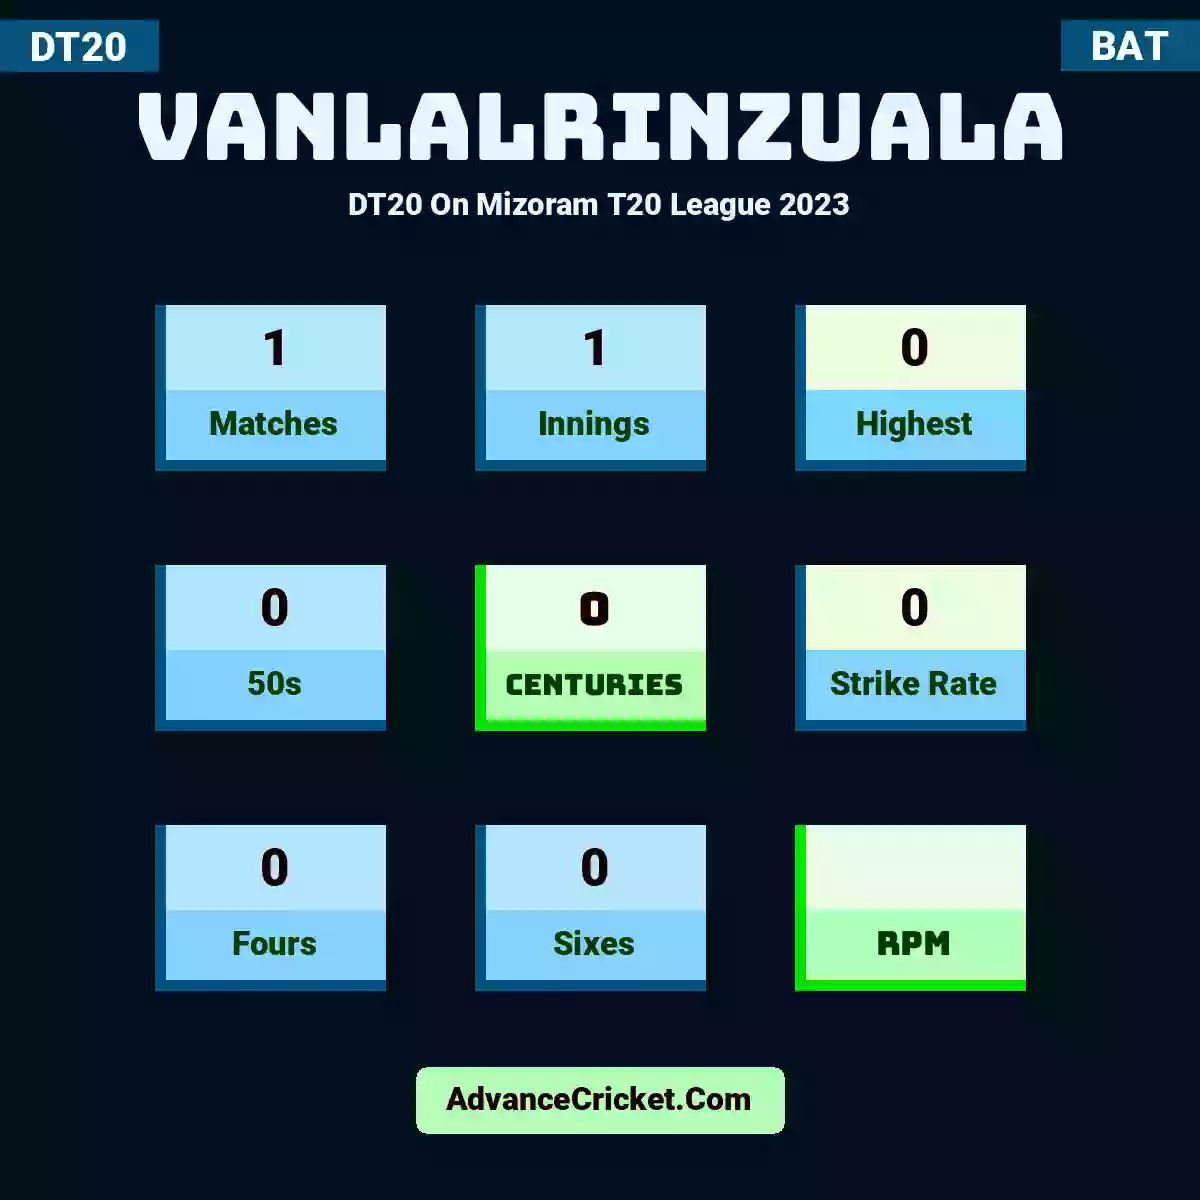 Vanlalrinzuala DT20  On Mizoram T20 League 2023, Vanlalrinzuala played 1 matches, scored 0 runs as highest, 0 half-centuries, and 0 centuries, with a strike rate of 0. Vanlalrinzuala hit 0 fours and 0 sixes.